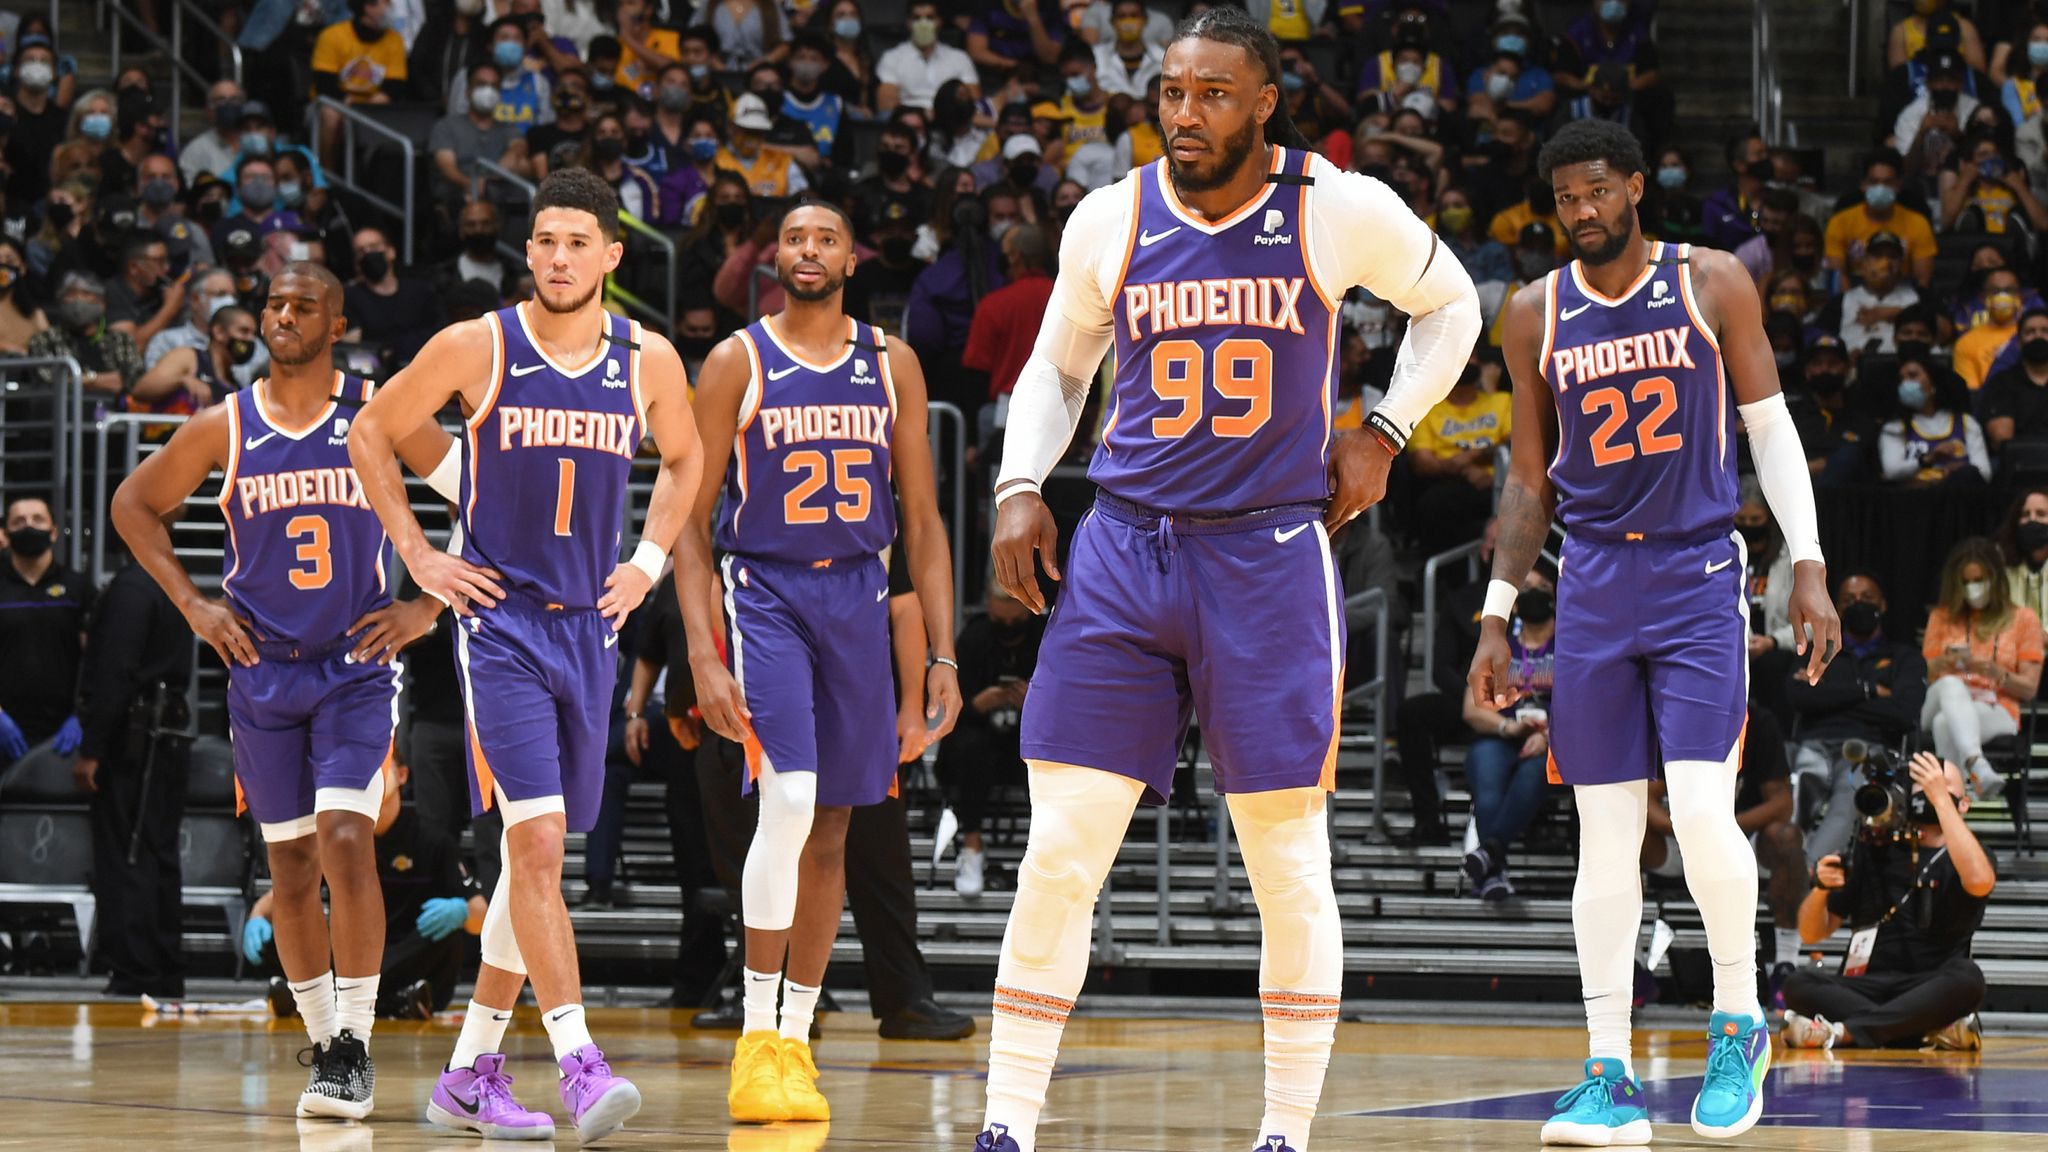 Phoenix Suns - Phoenix Suns updated their cover photo.